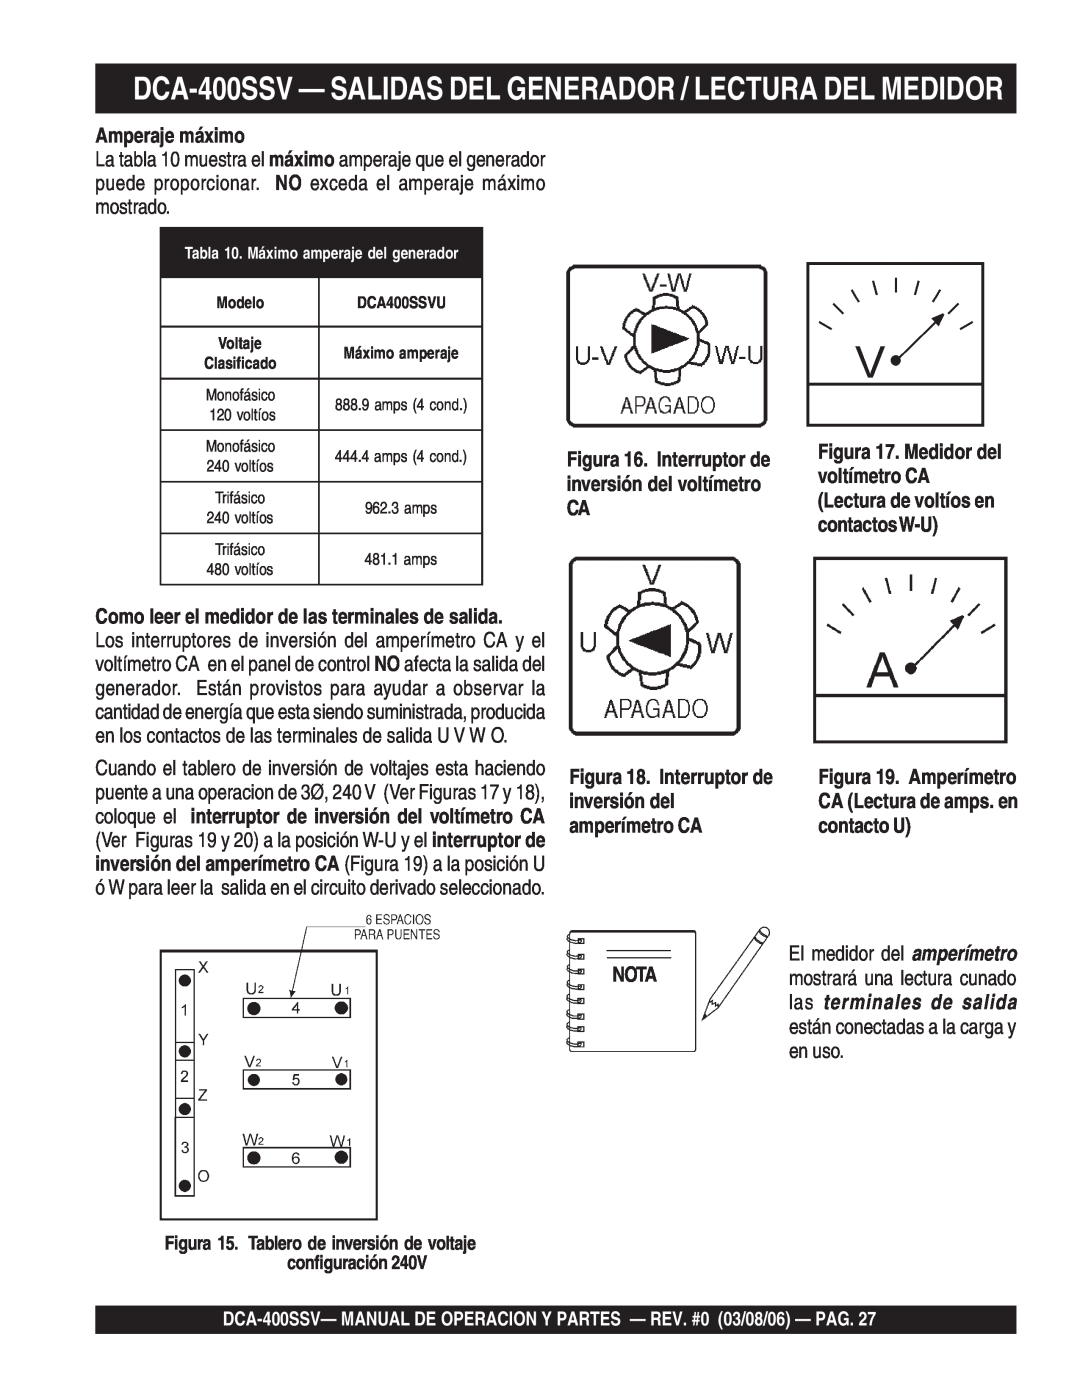 Multiquip DCA-400SSV operation manual Amperaje máximo 